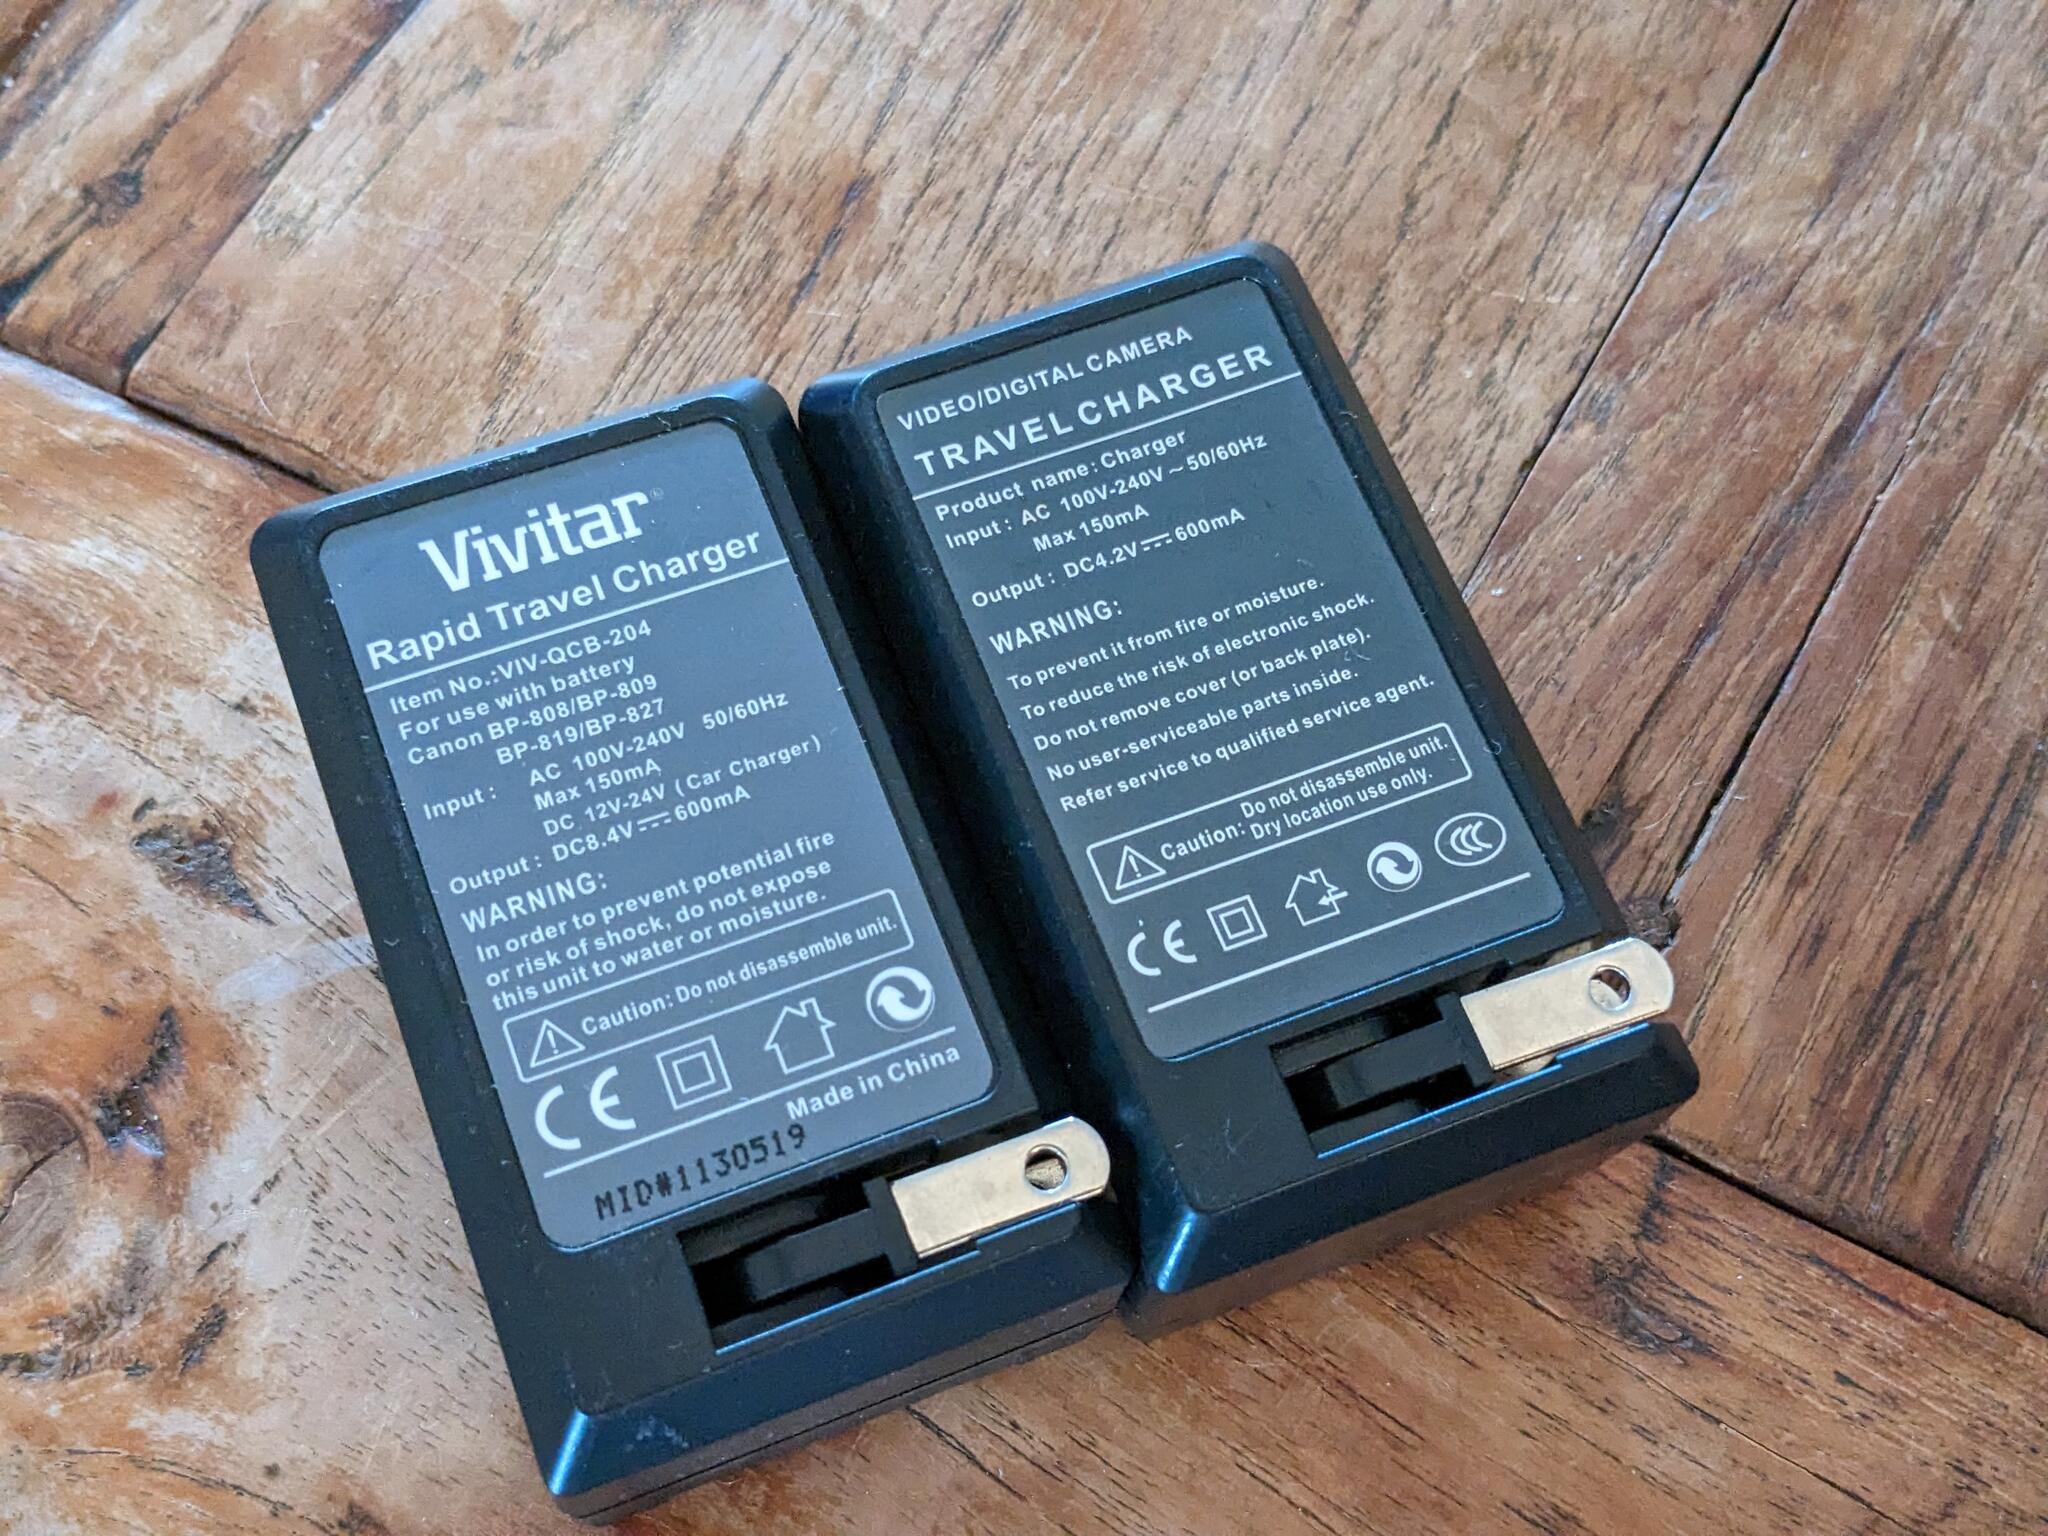 Vivitar Rapid Travel Battery Charger For $5 In Goleta, CA | For Sale & Free  — Nextdoor